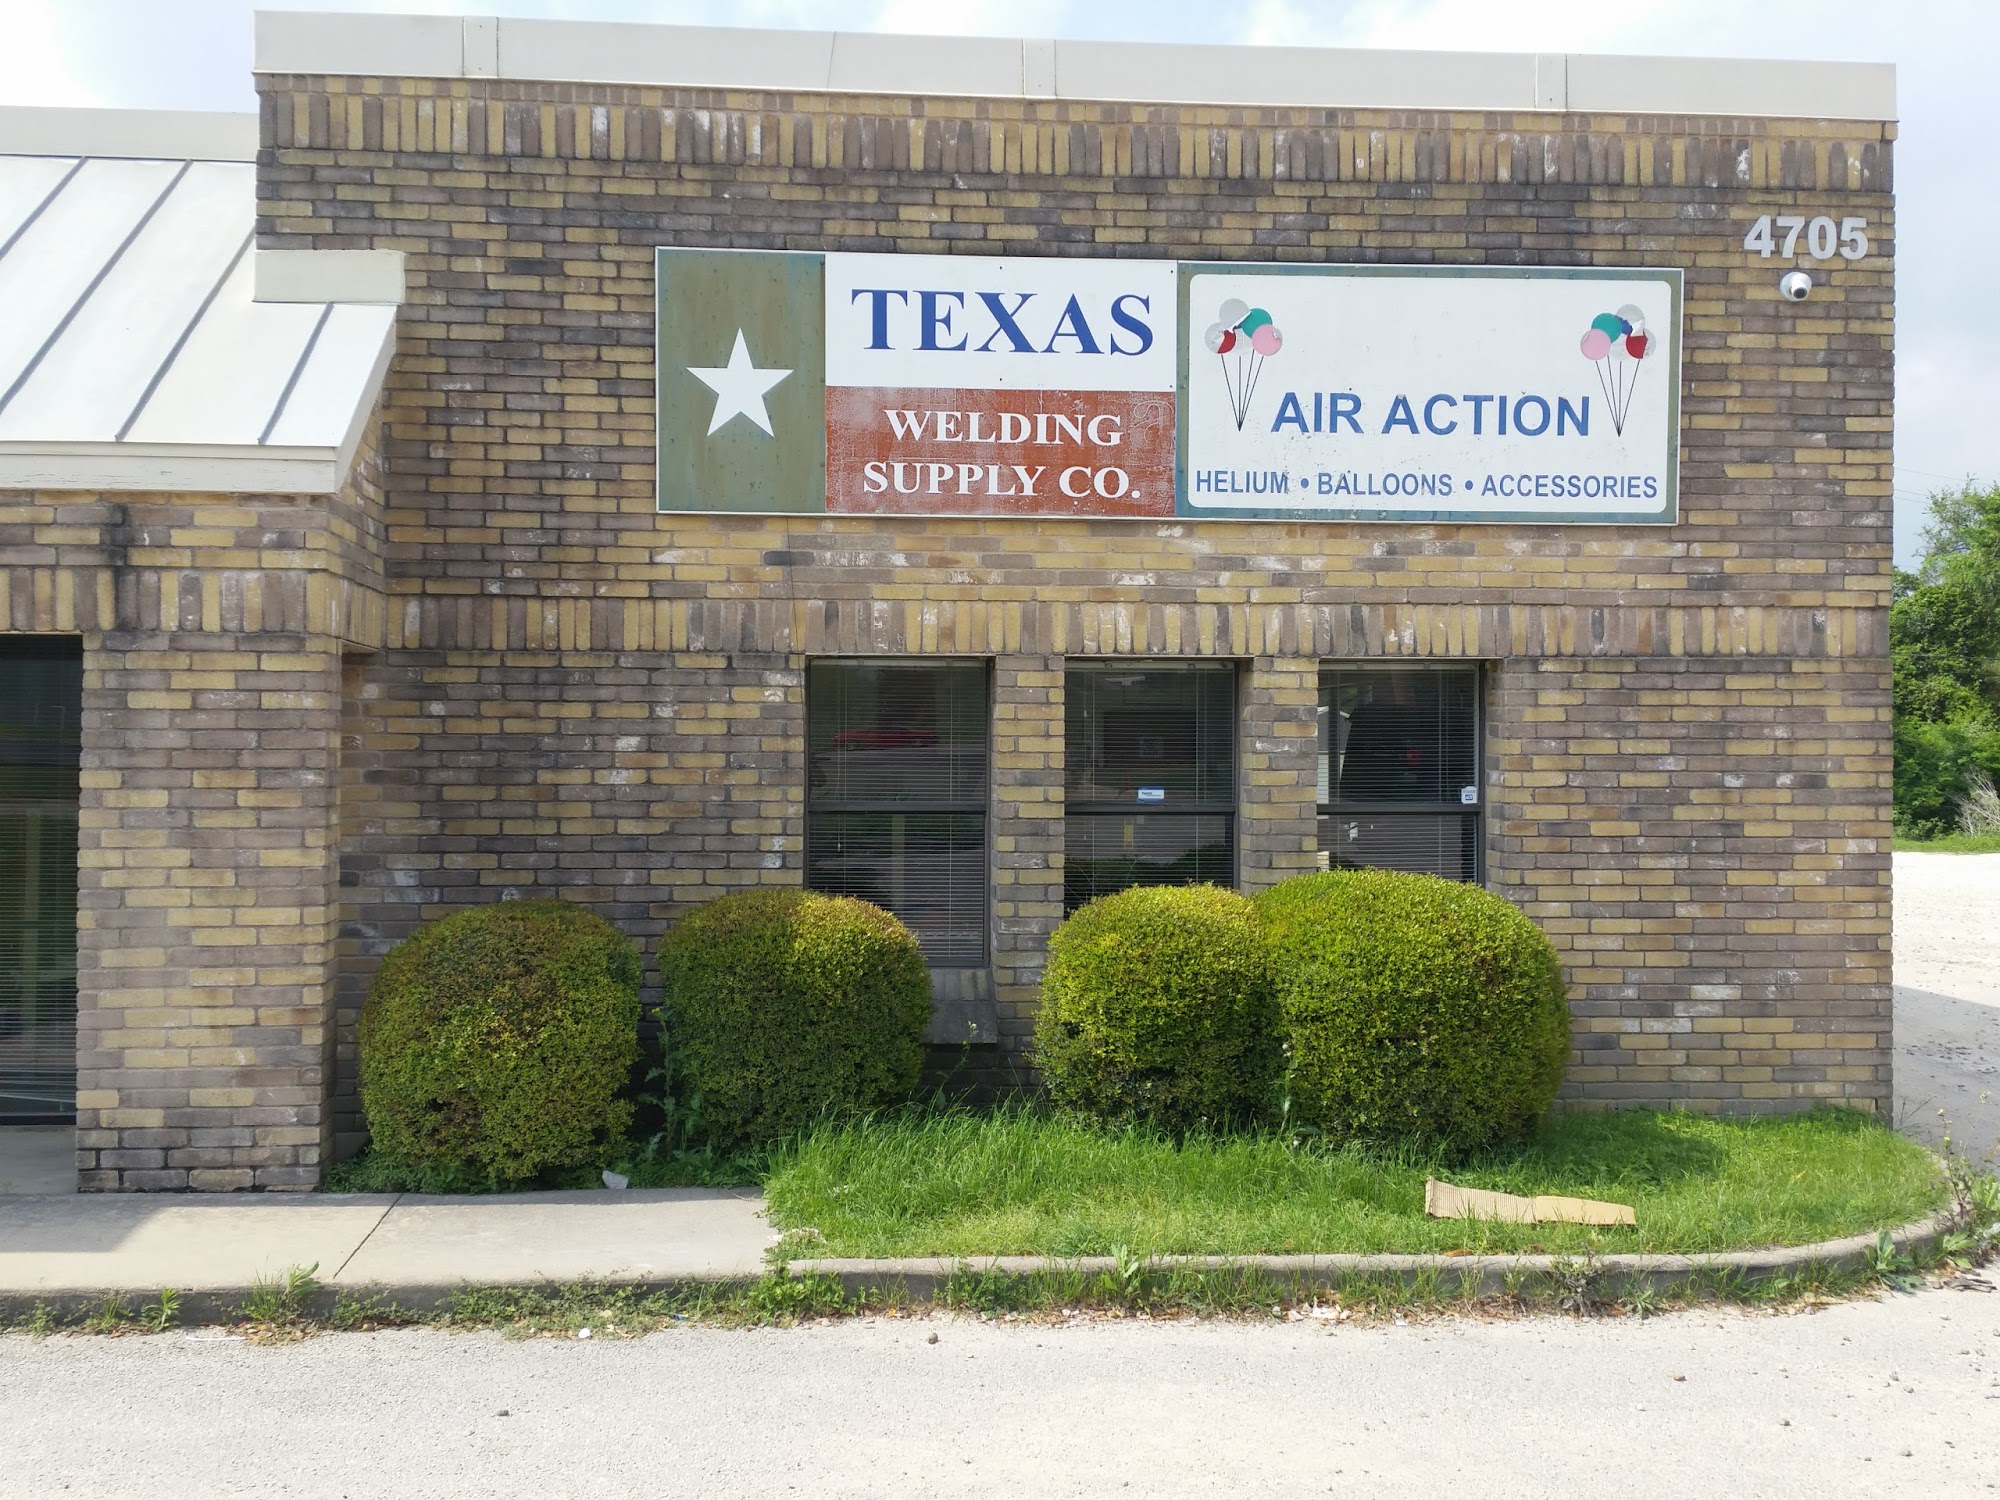 Texas Welding Supply